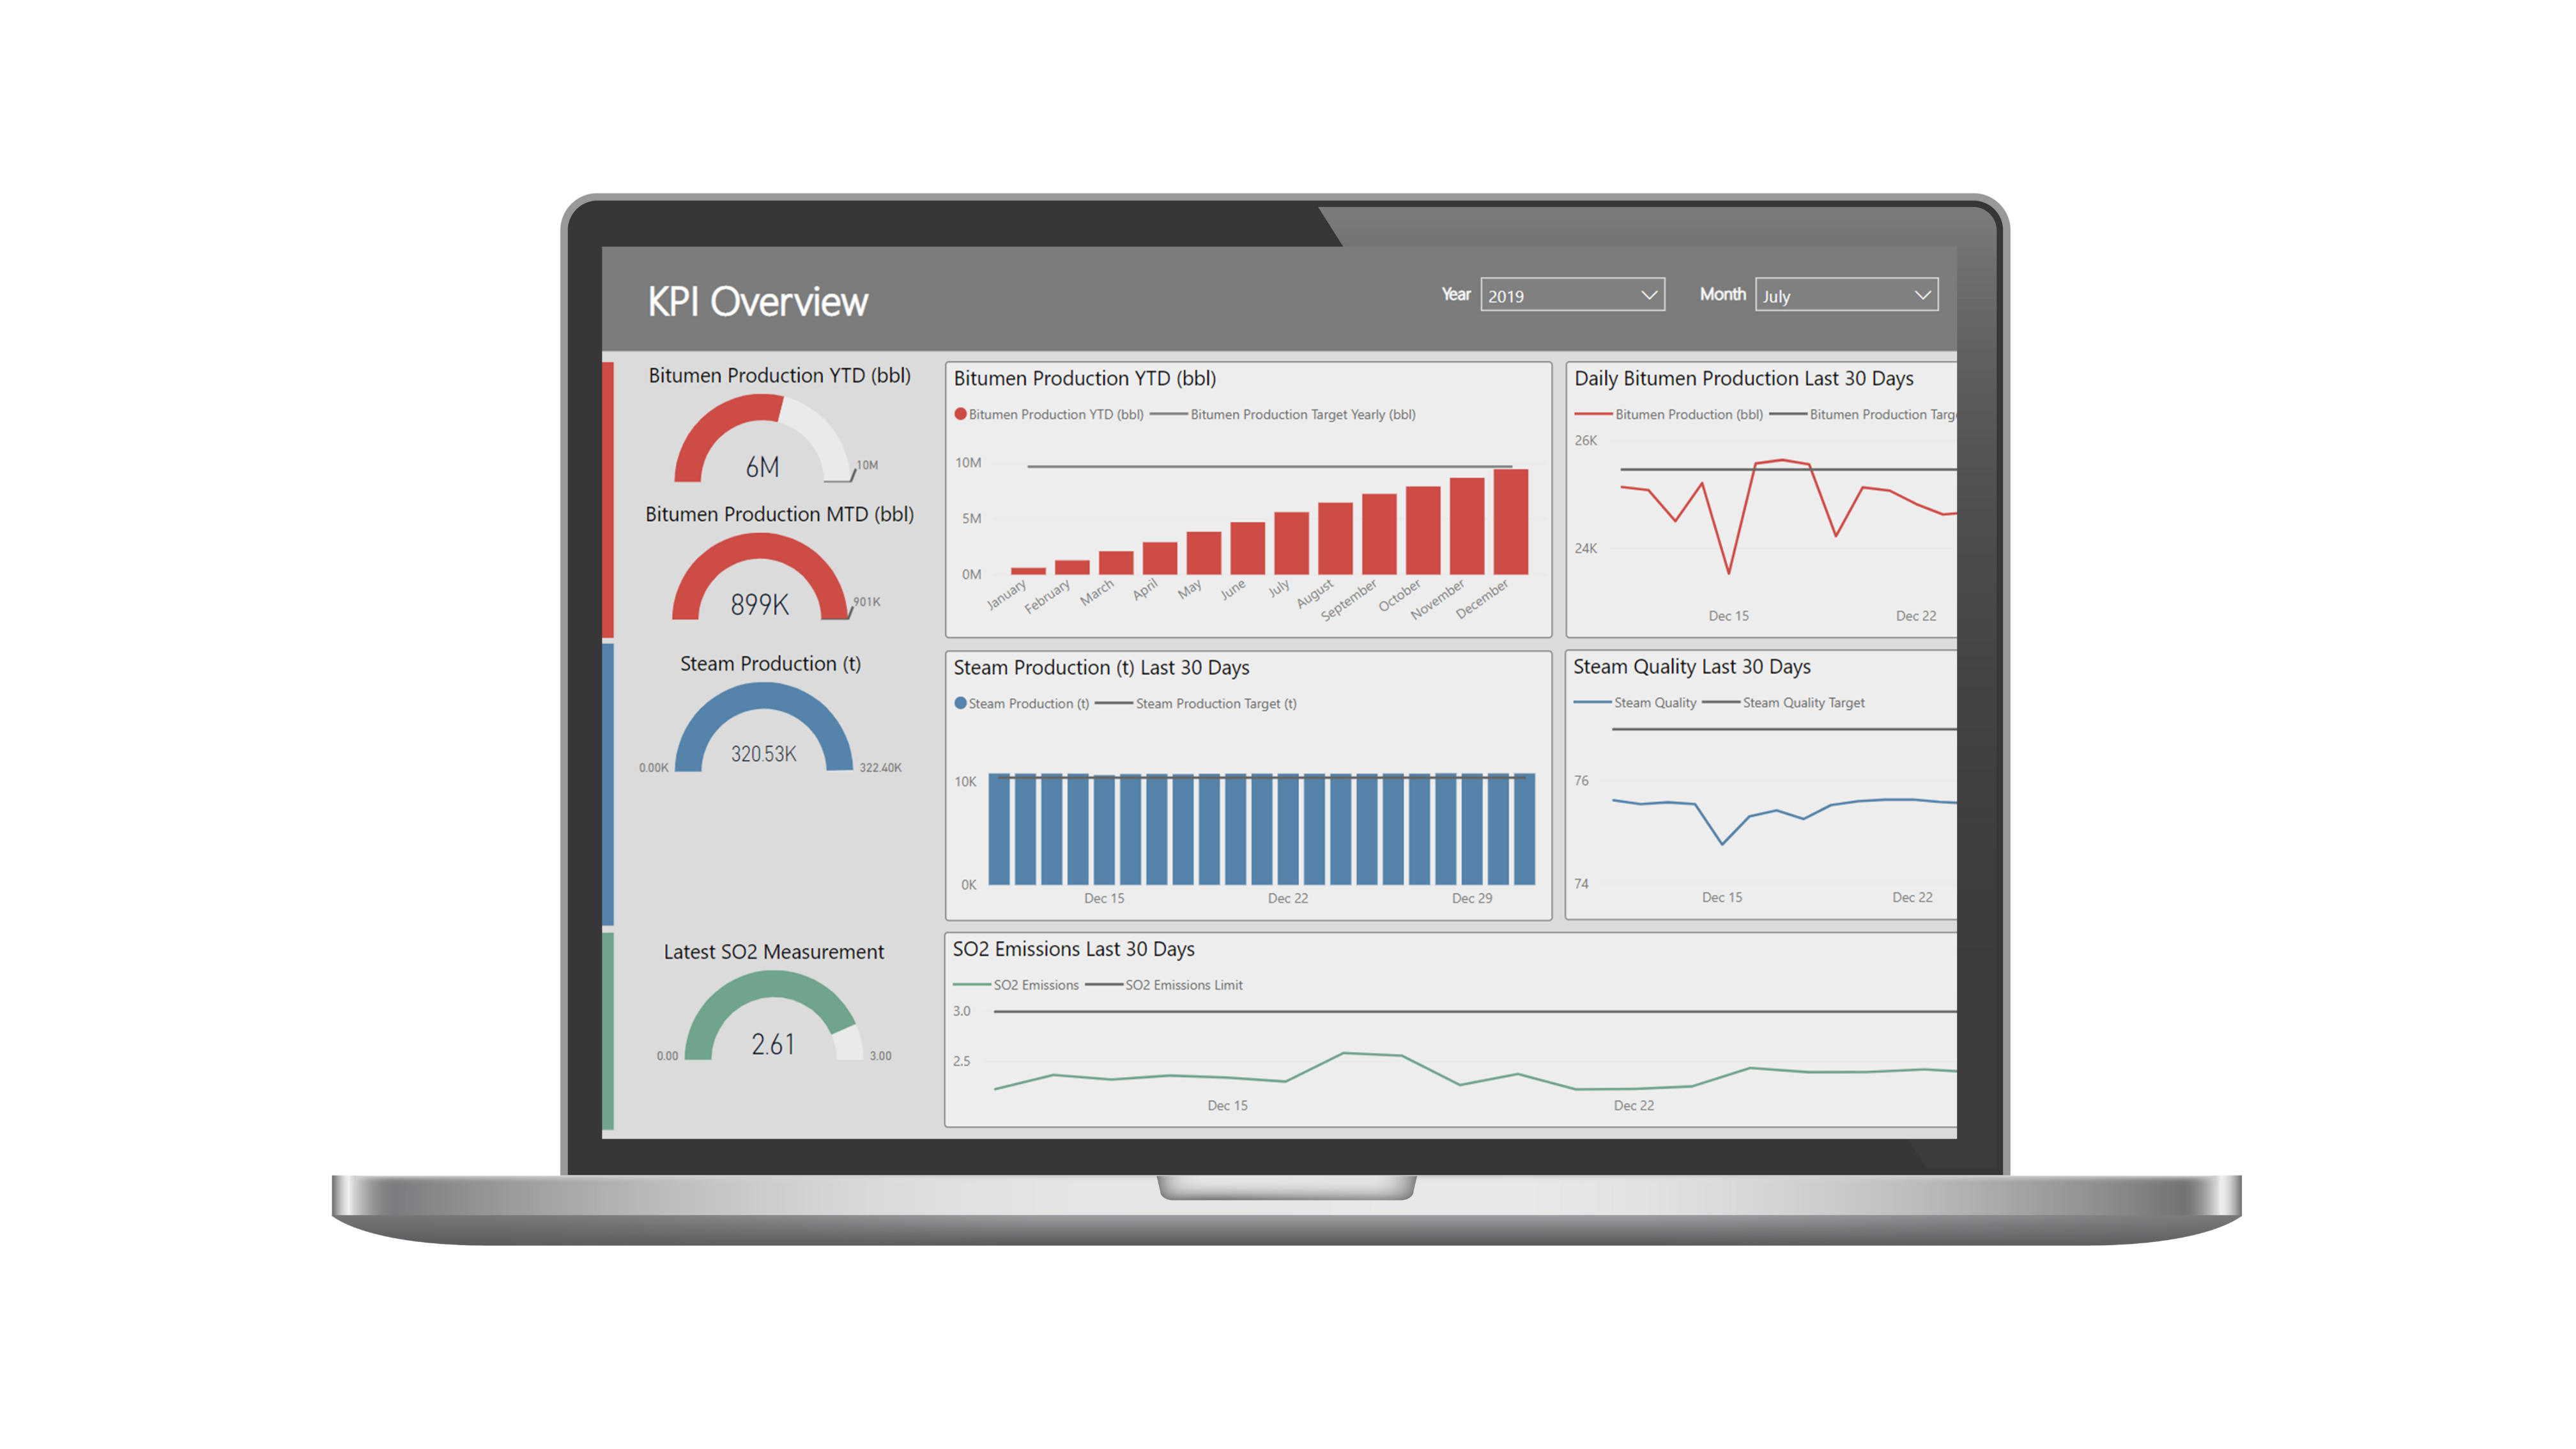 Laptop image - Showing KPI Dashboard